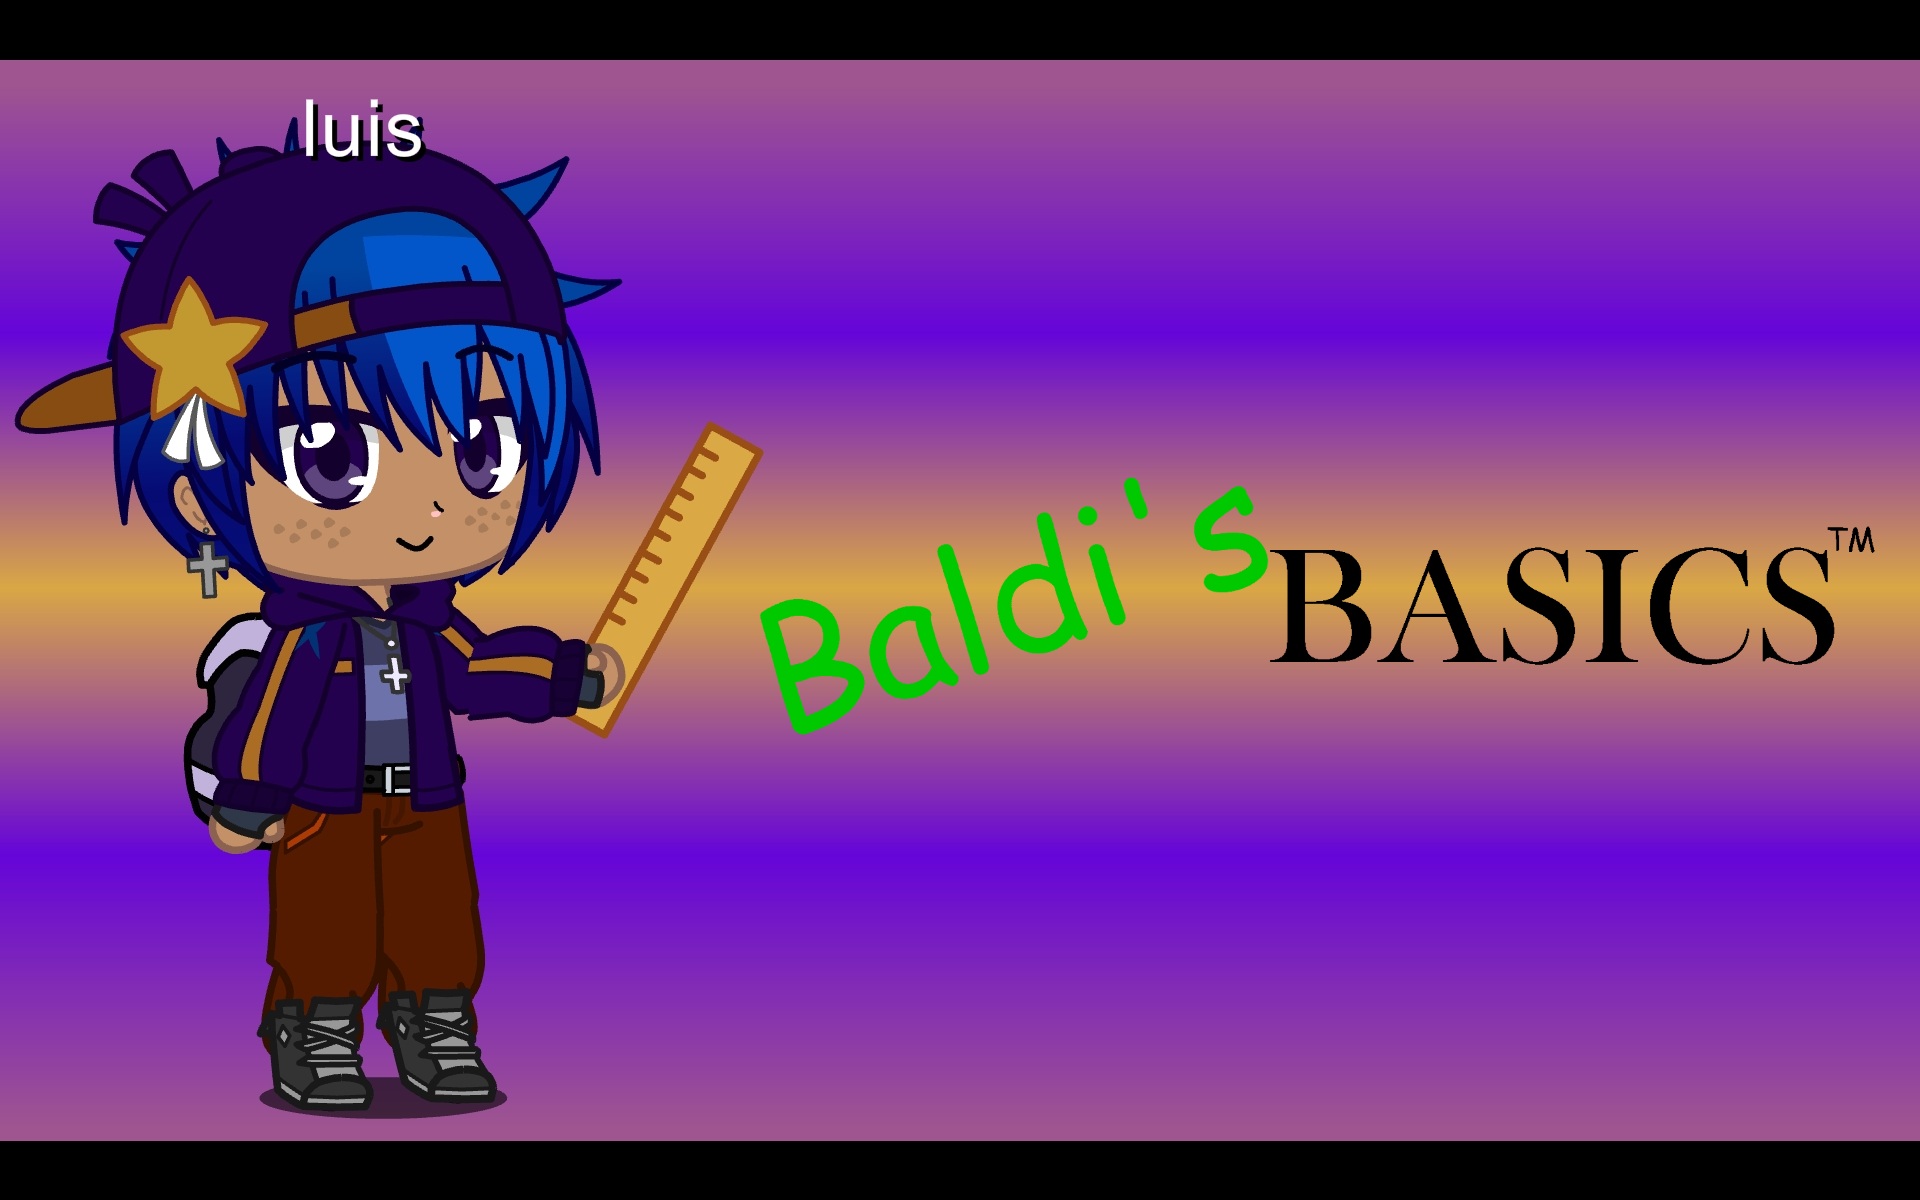 Baldi characters in Gacha Club!